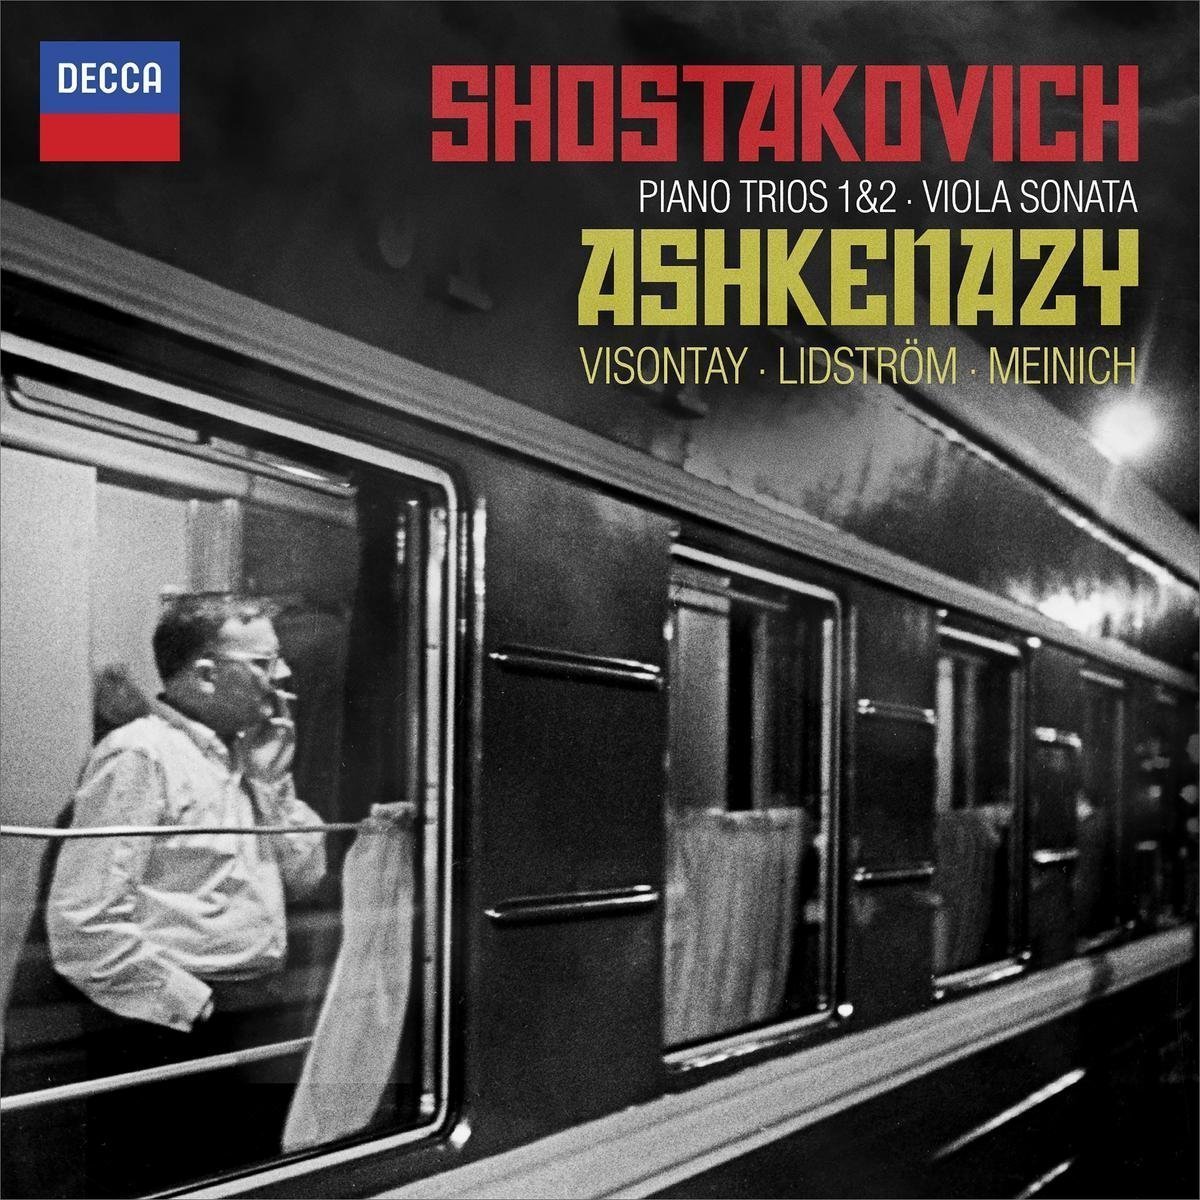 Shostakovich - Piano Trios Nos. 1 and 2 - Viola Sonata | Vladimir Ashkenazy